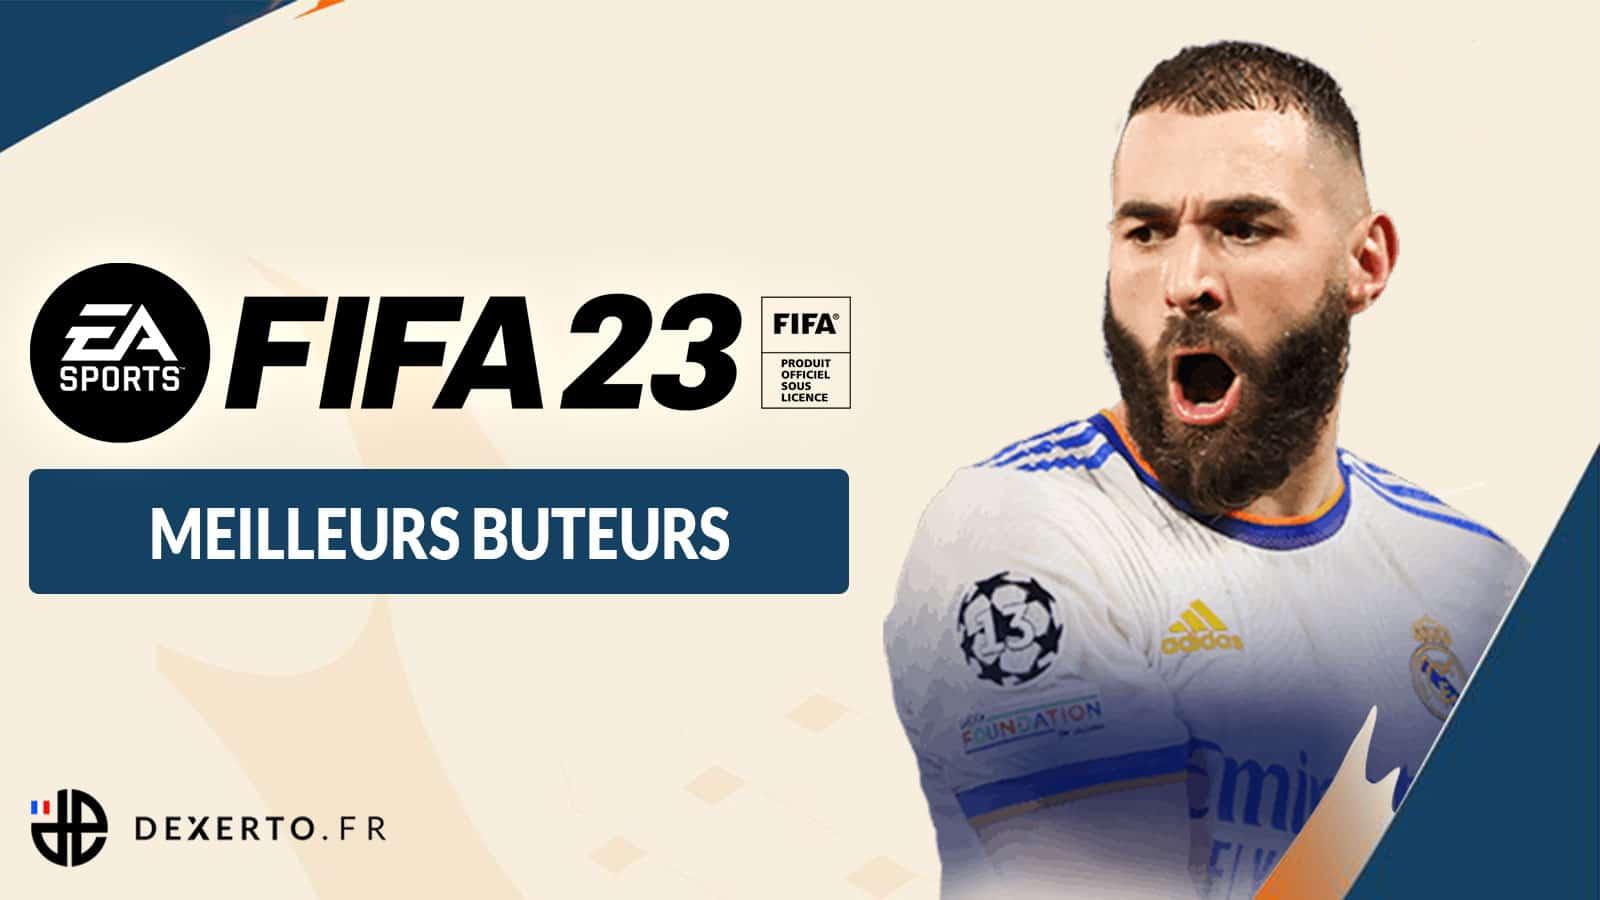 FIFA 23 Buteurs